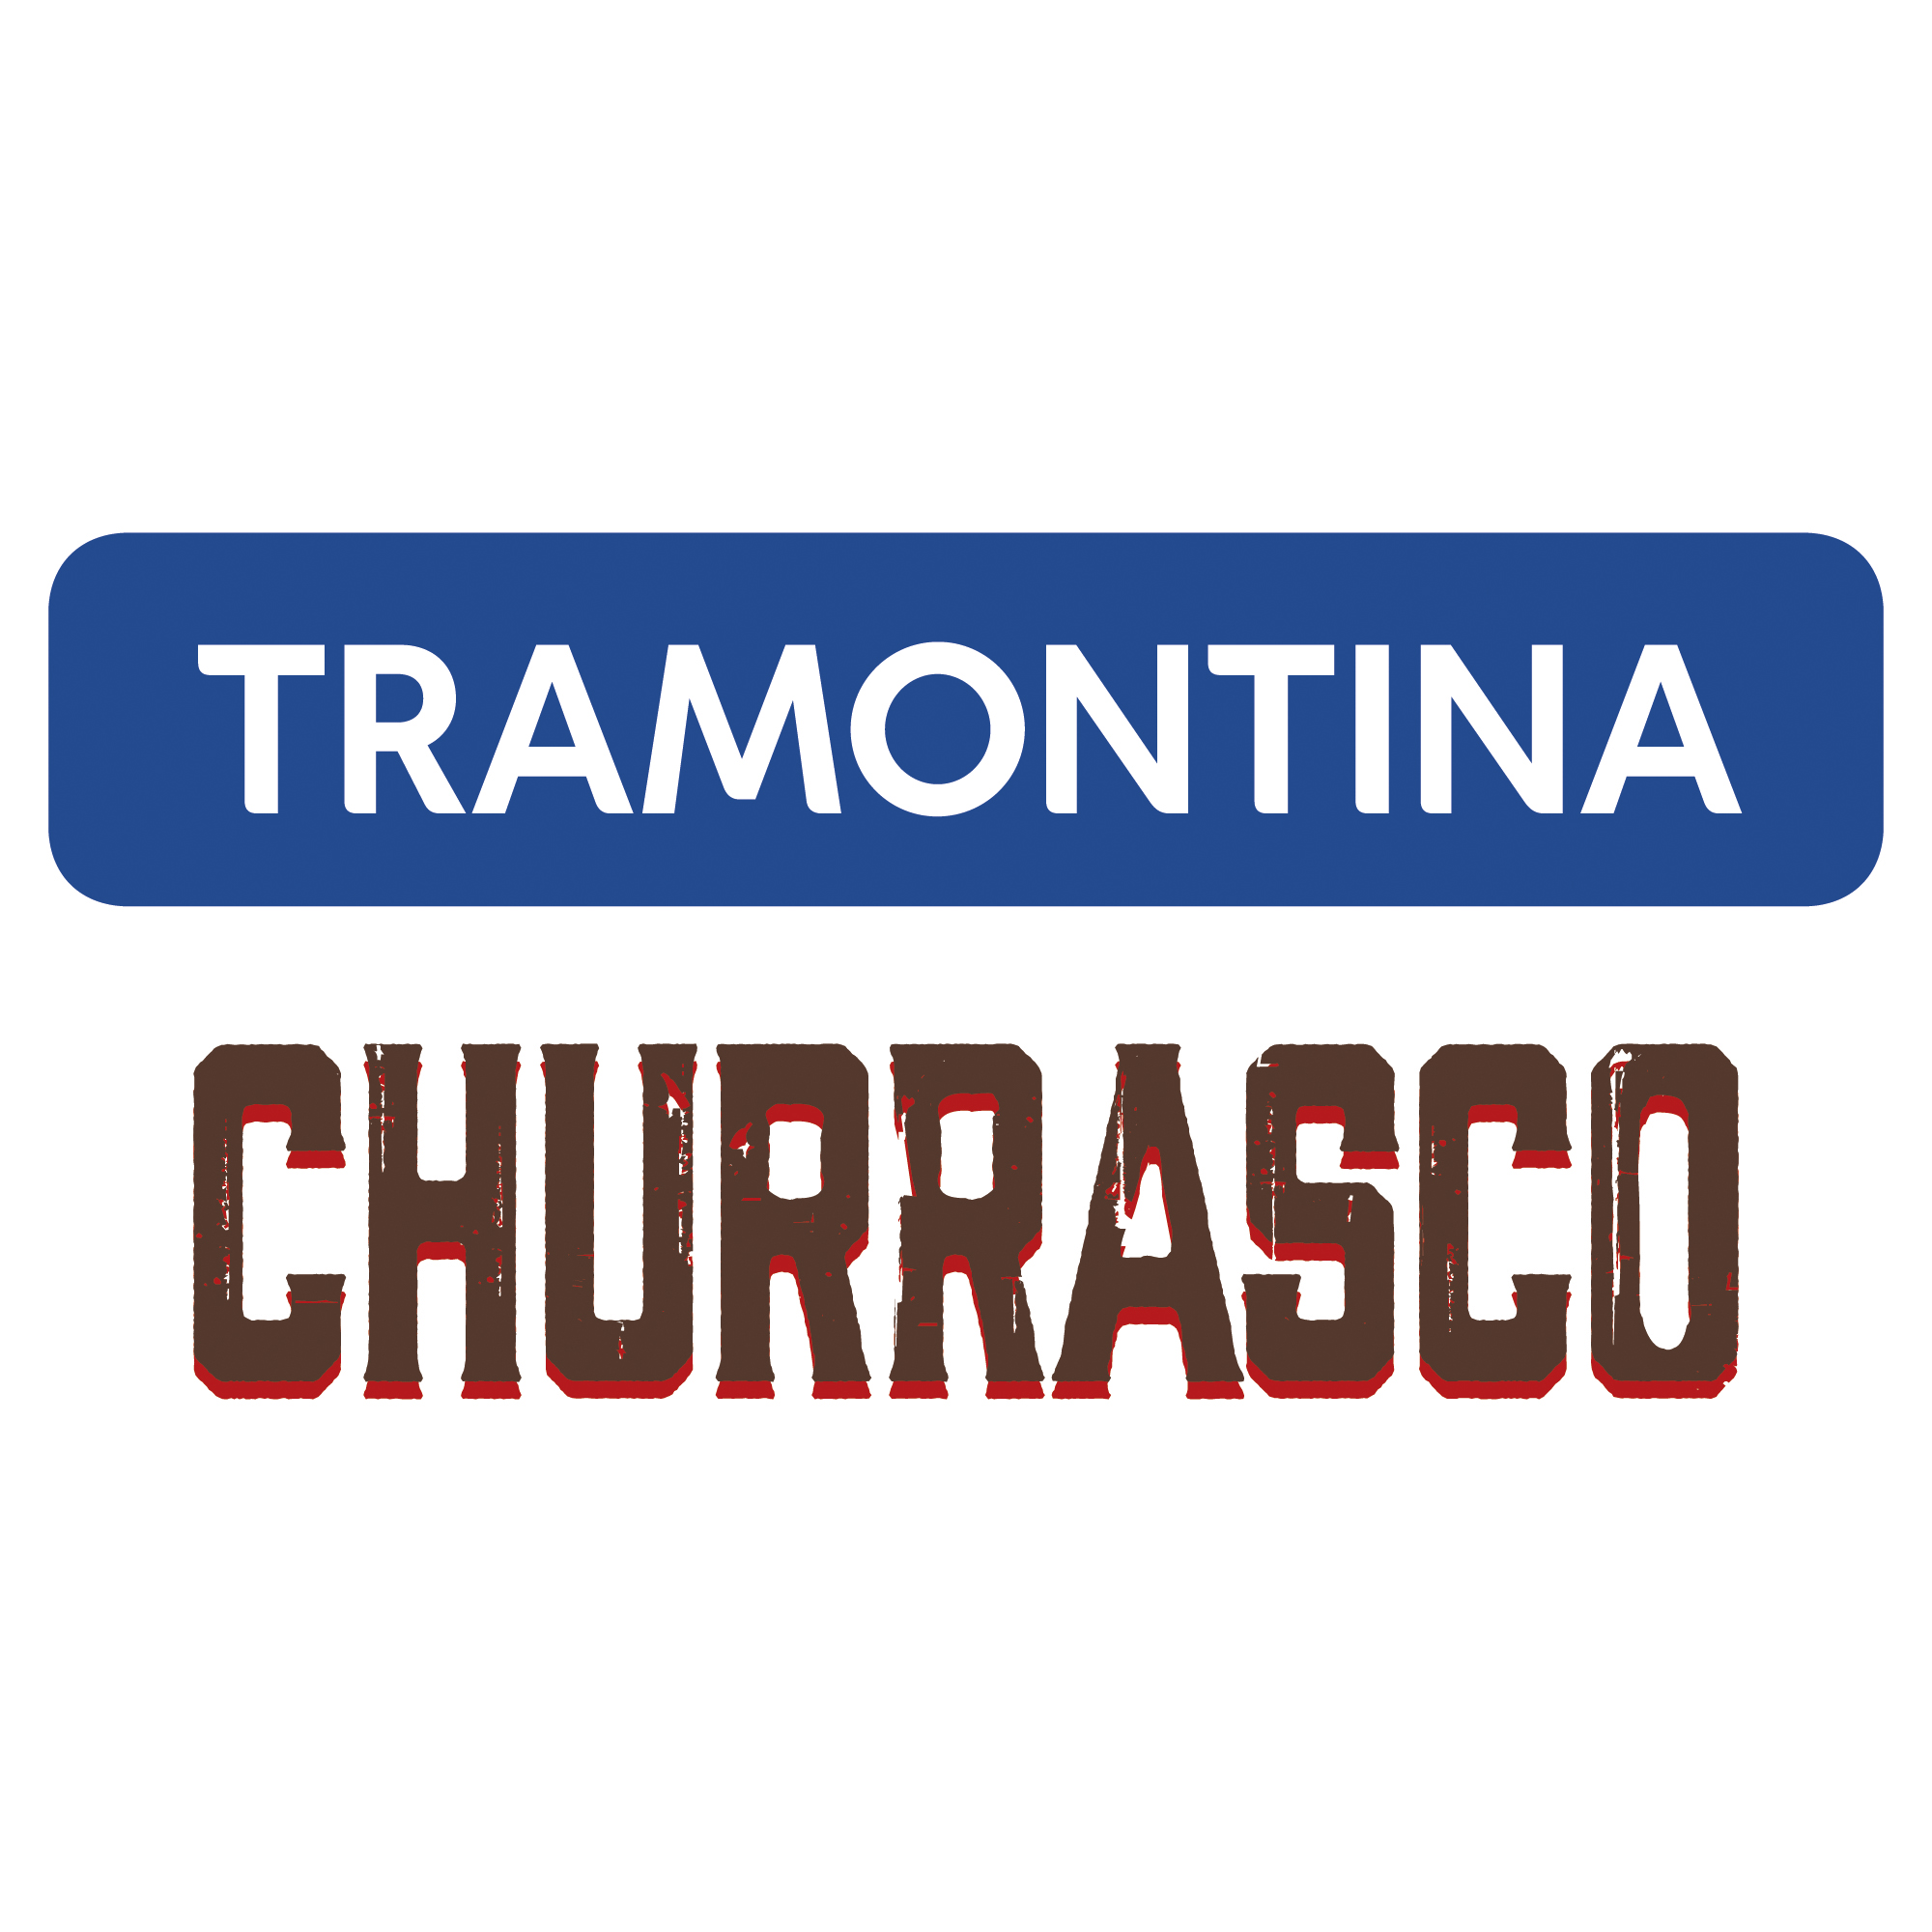 Tramontina Churrasco